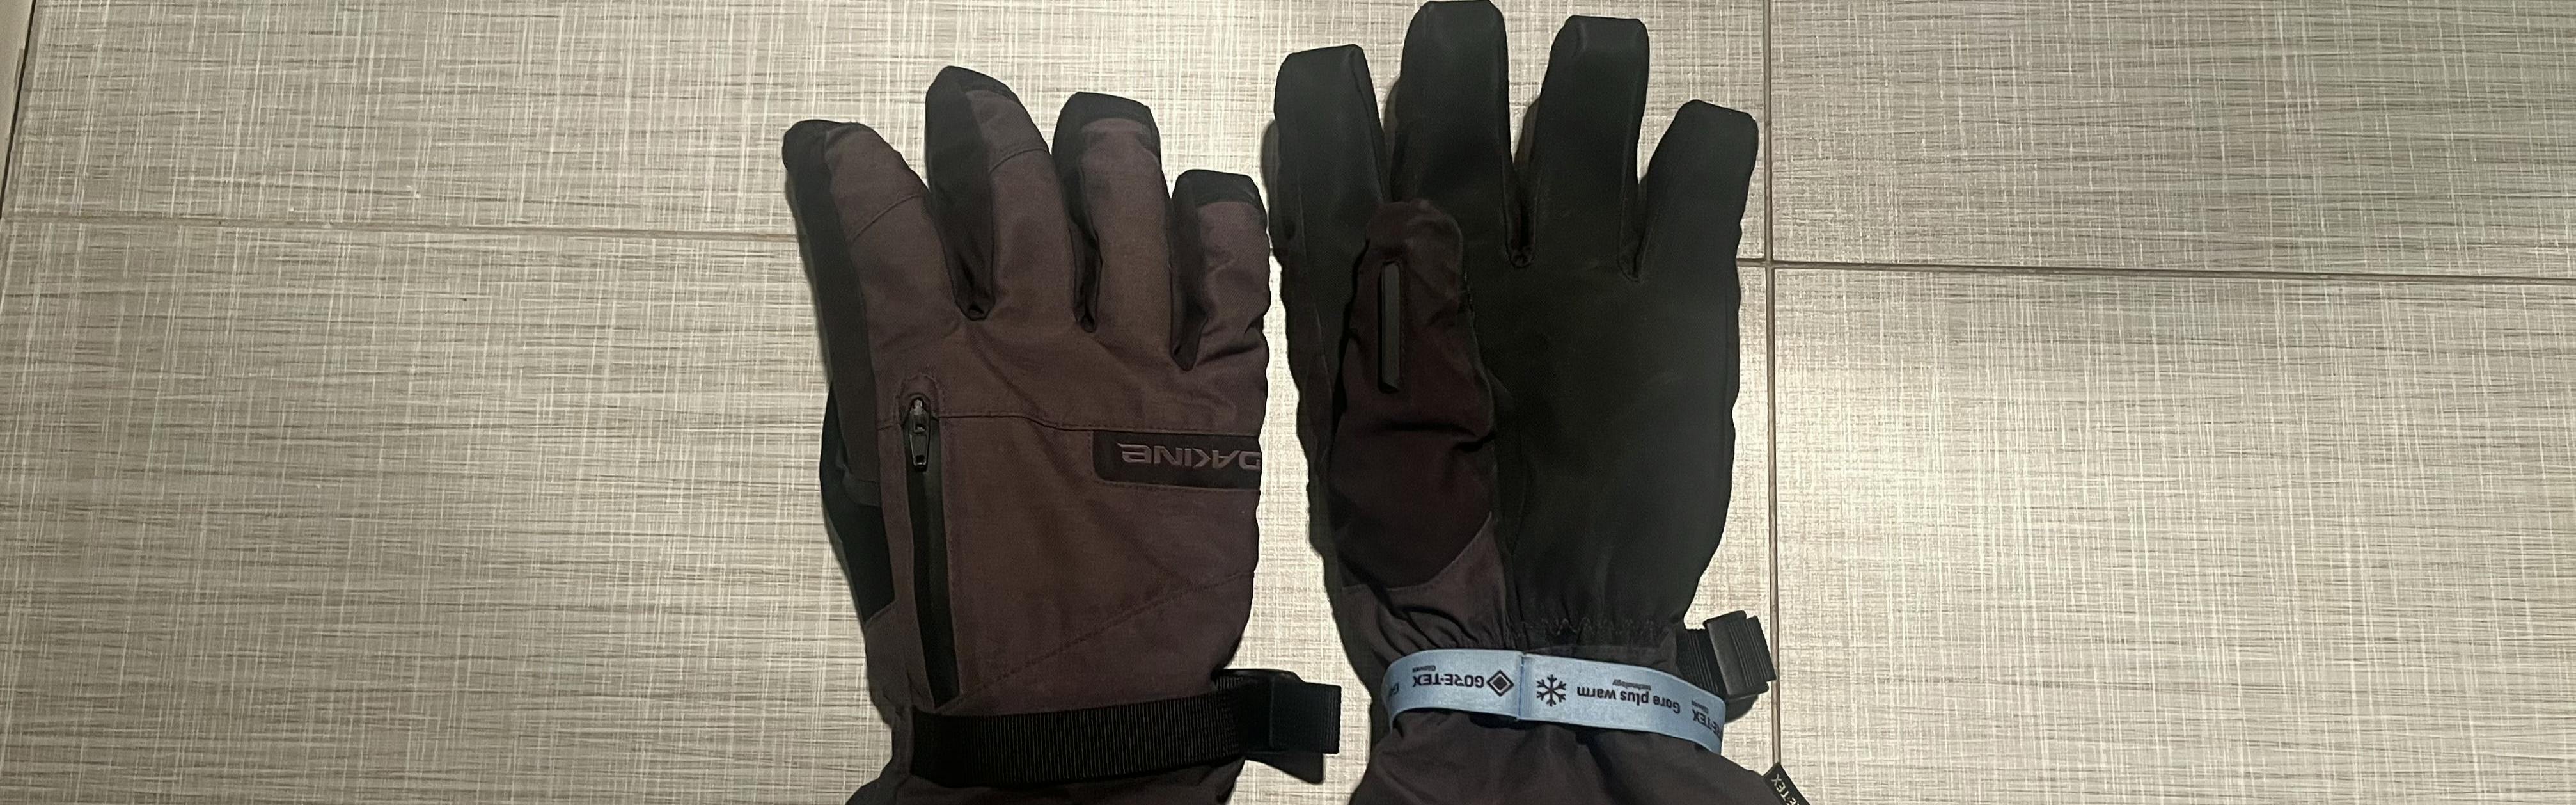 The Dakine Men's Titan GORE-TEX Gloves.